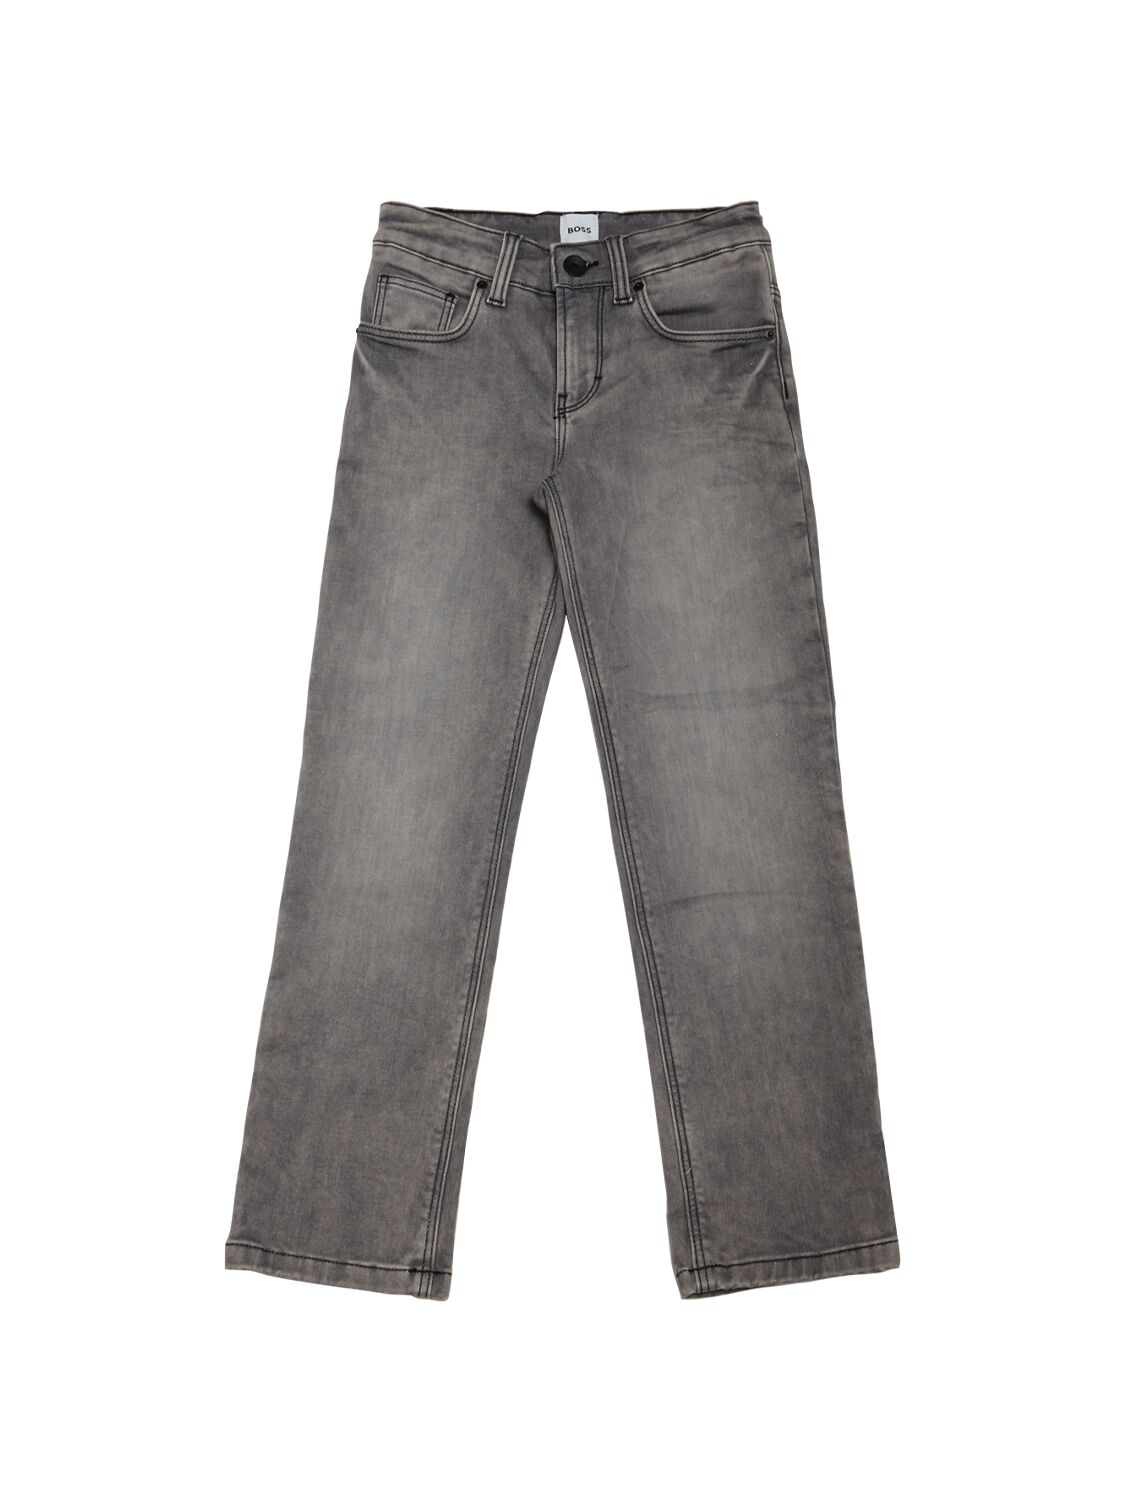 Image of Cotton Denim Stretch Jeans